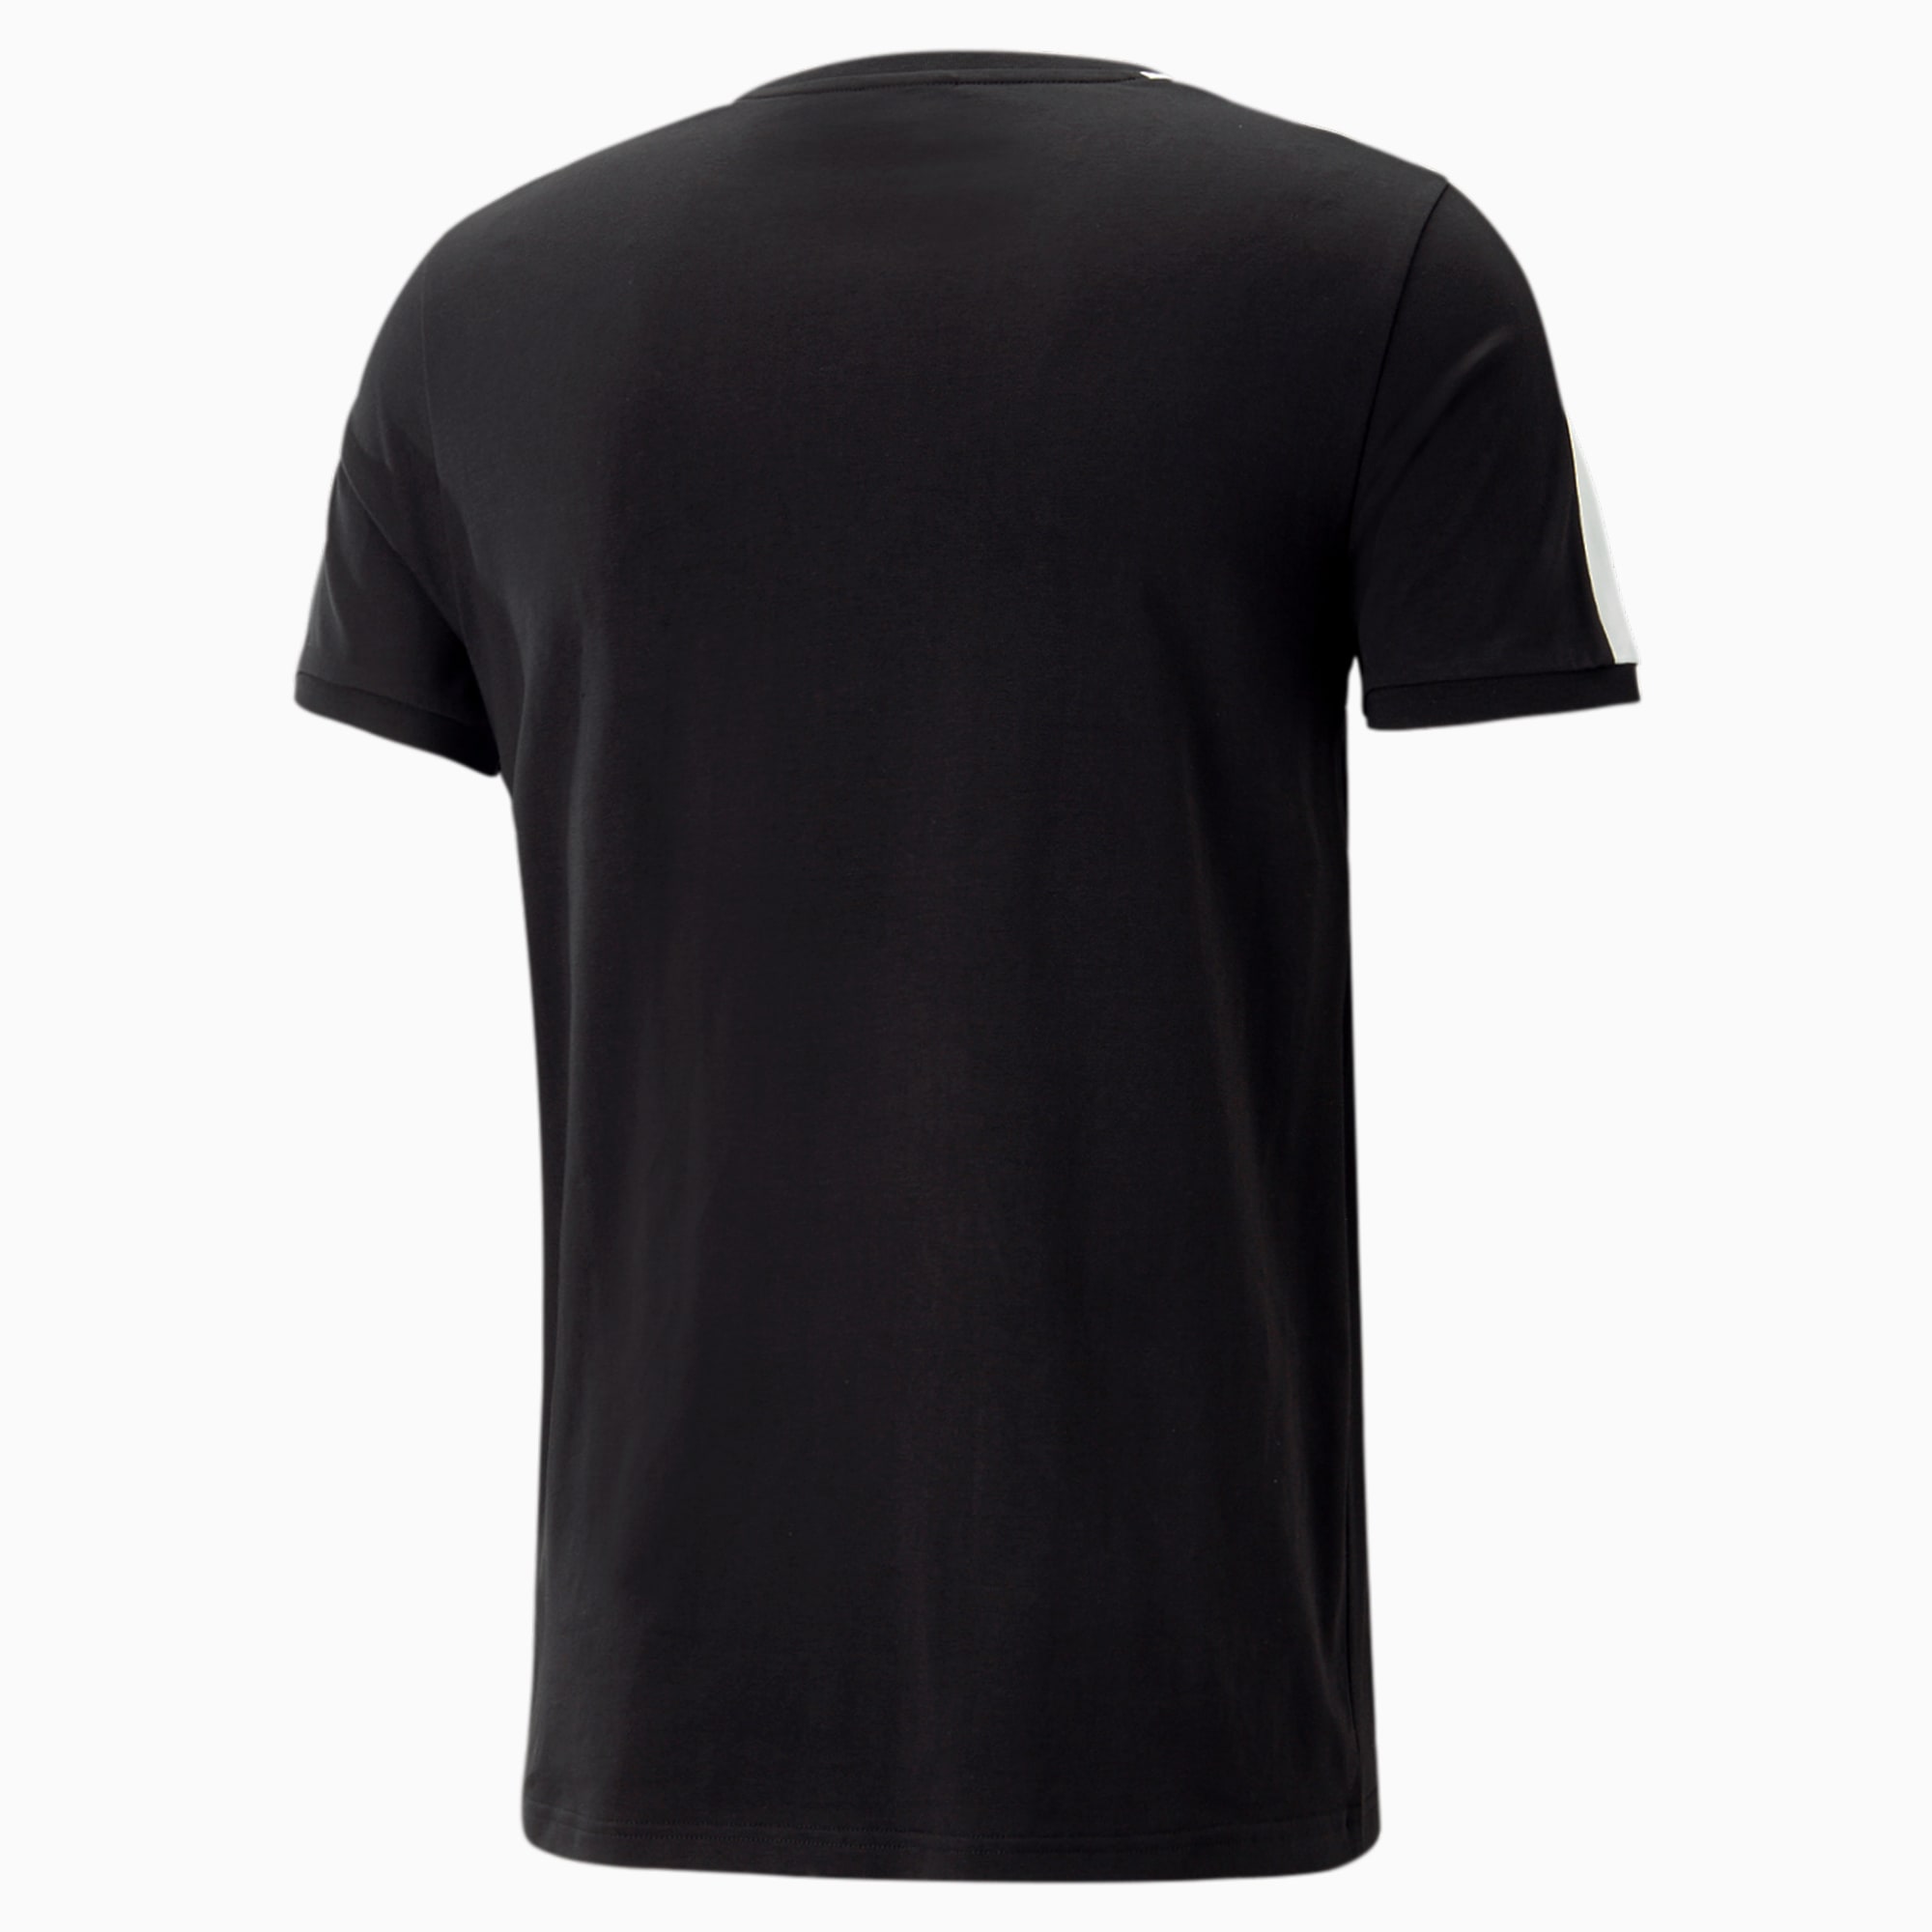 PUMA T7 Iconic T-Shirt Men, Black, Size M, Clothing